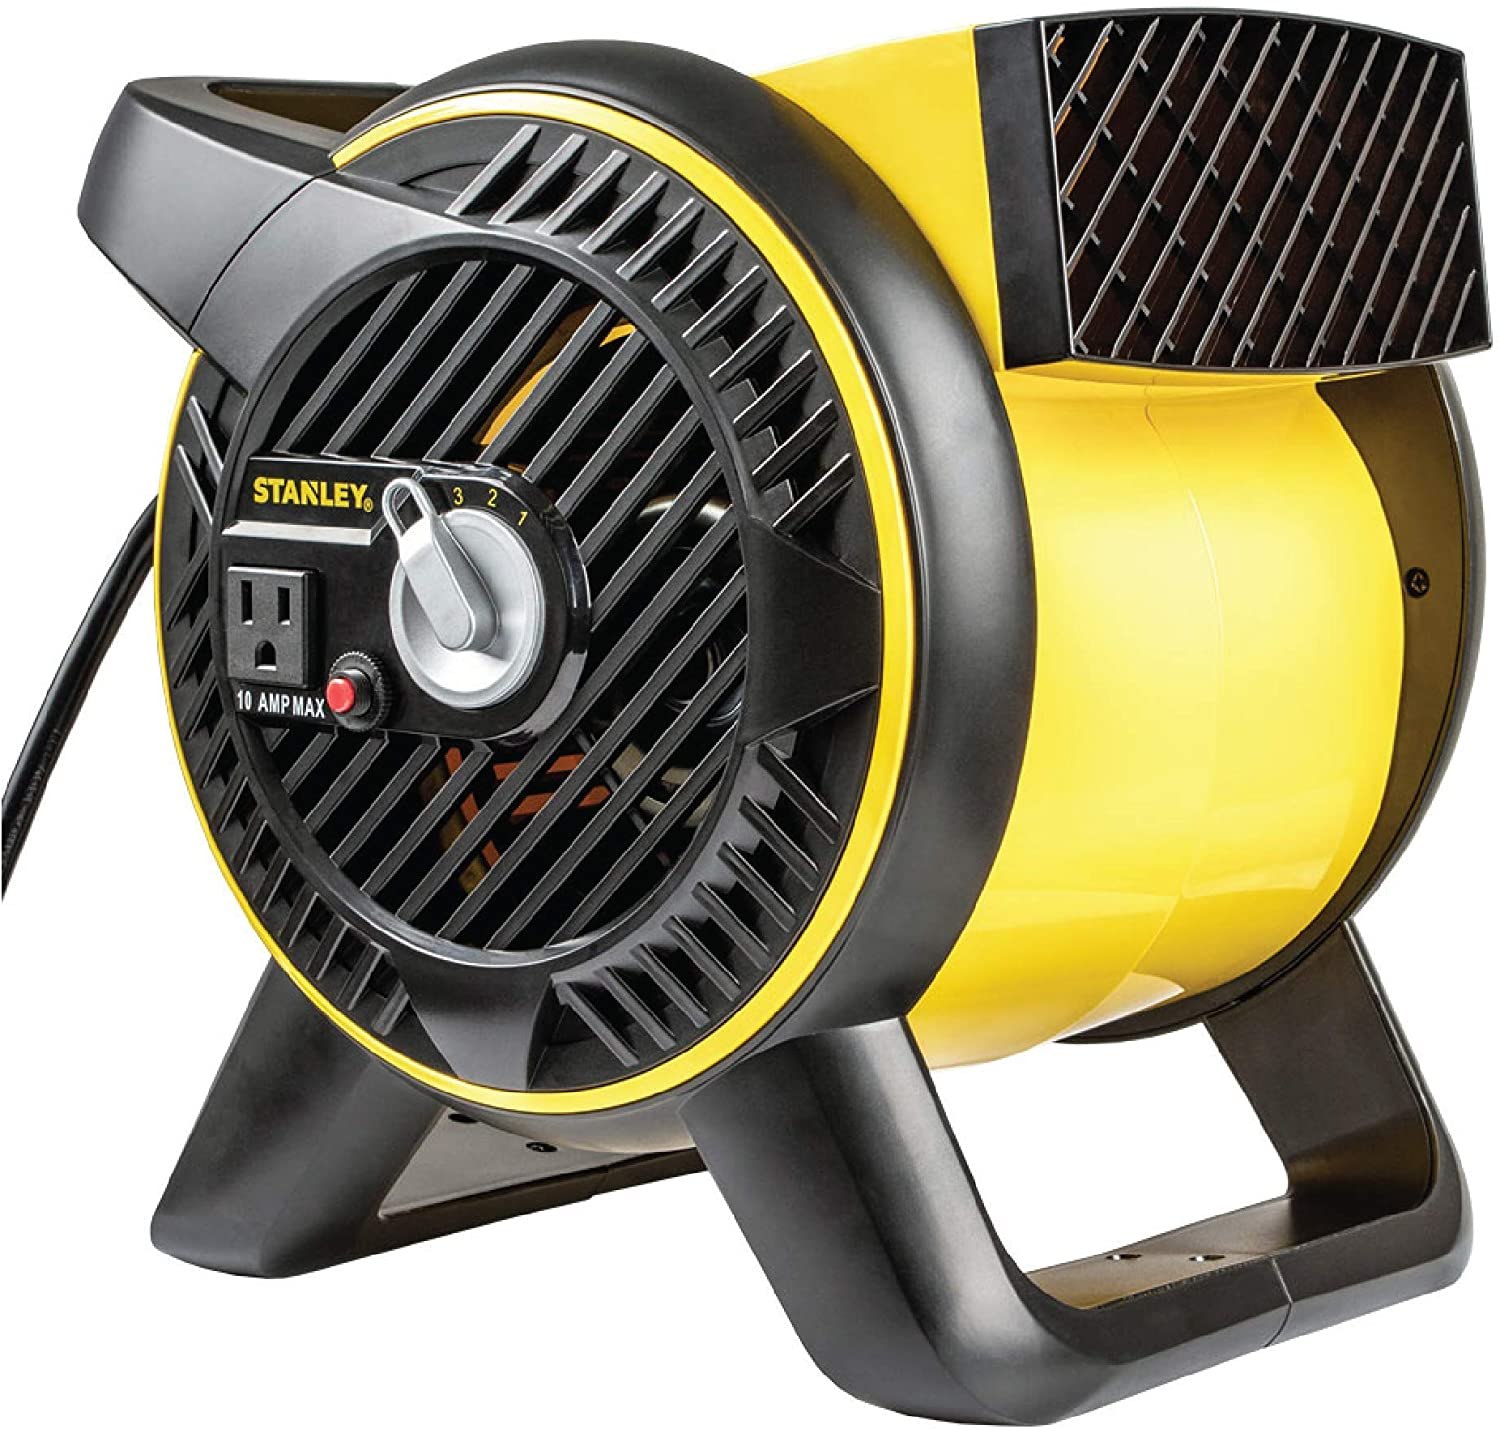 Dri-Eaz Dri-Pod 1HP - Omnidirectional Axial Floor Dryer Fan